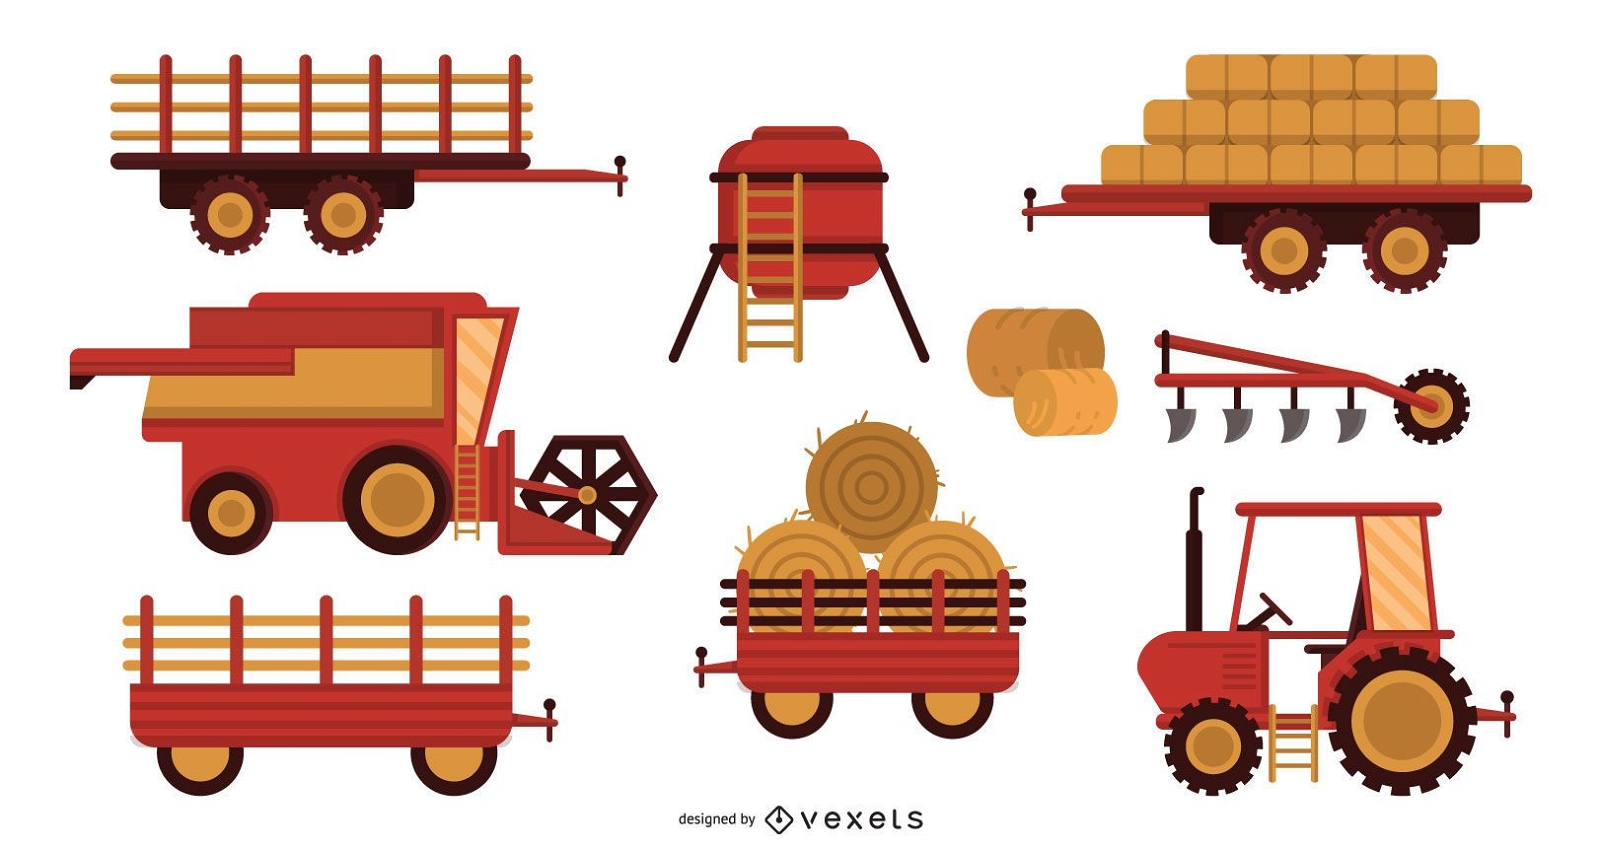 Desenhos animados rurais de trator agrícola, Vetor Premium